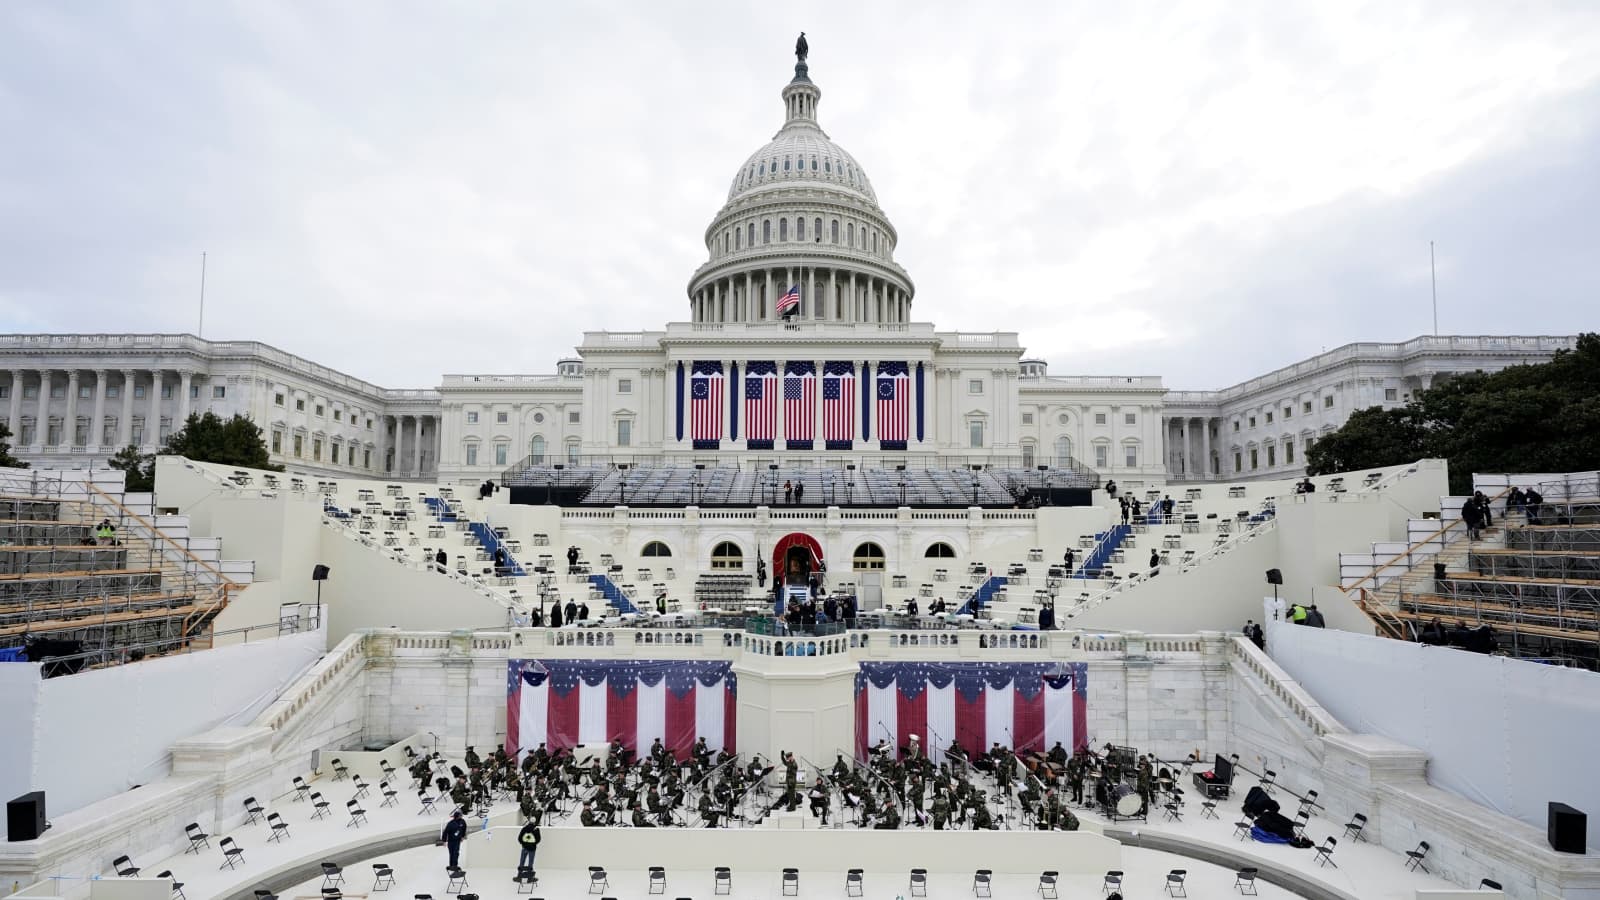 The Biden Inauguration